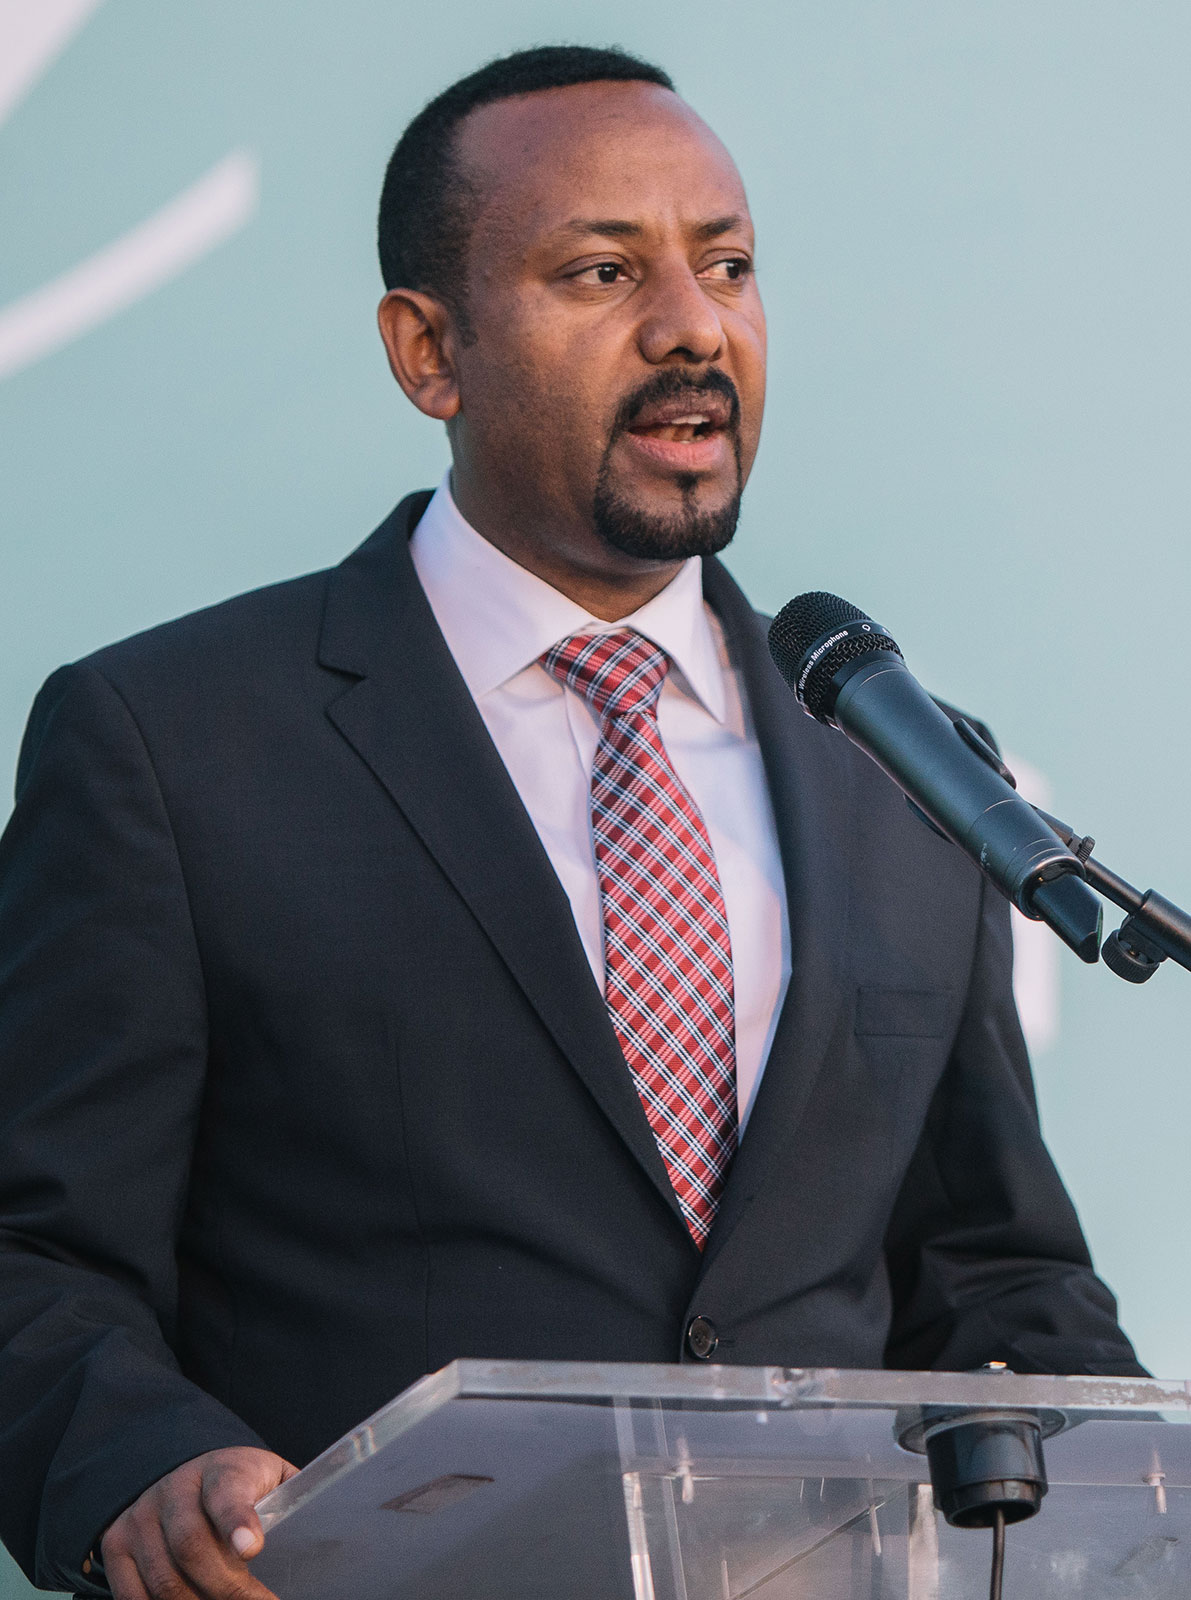 ETHIOPIA HAS “NO INTENTION TO HARM “EGYPT, SUDAN-PM